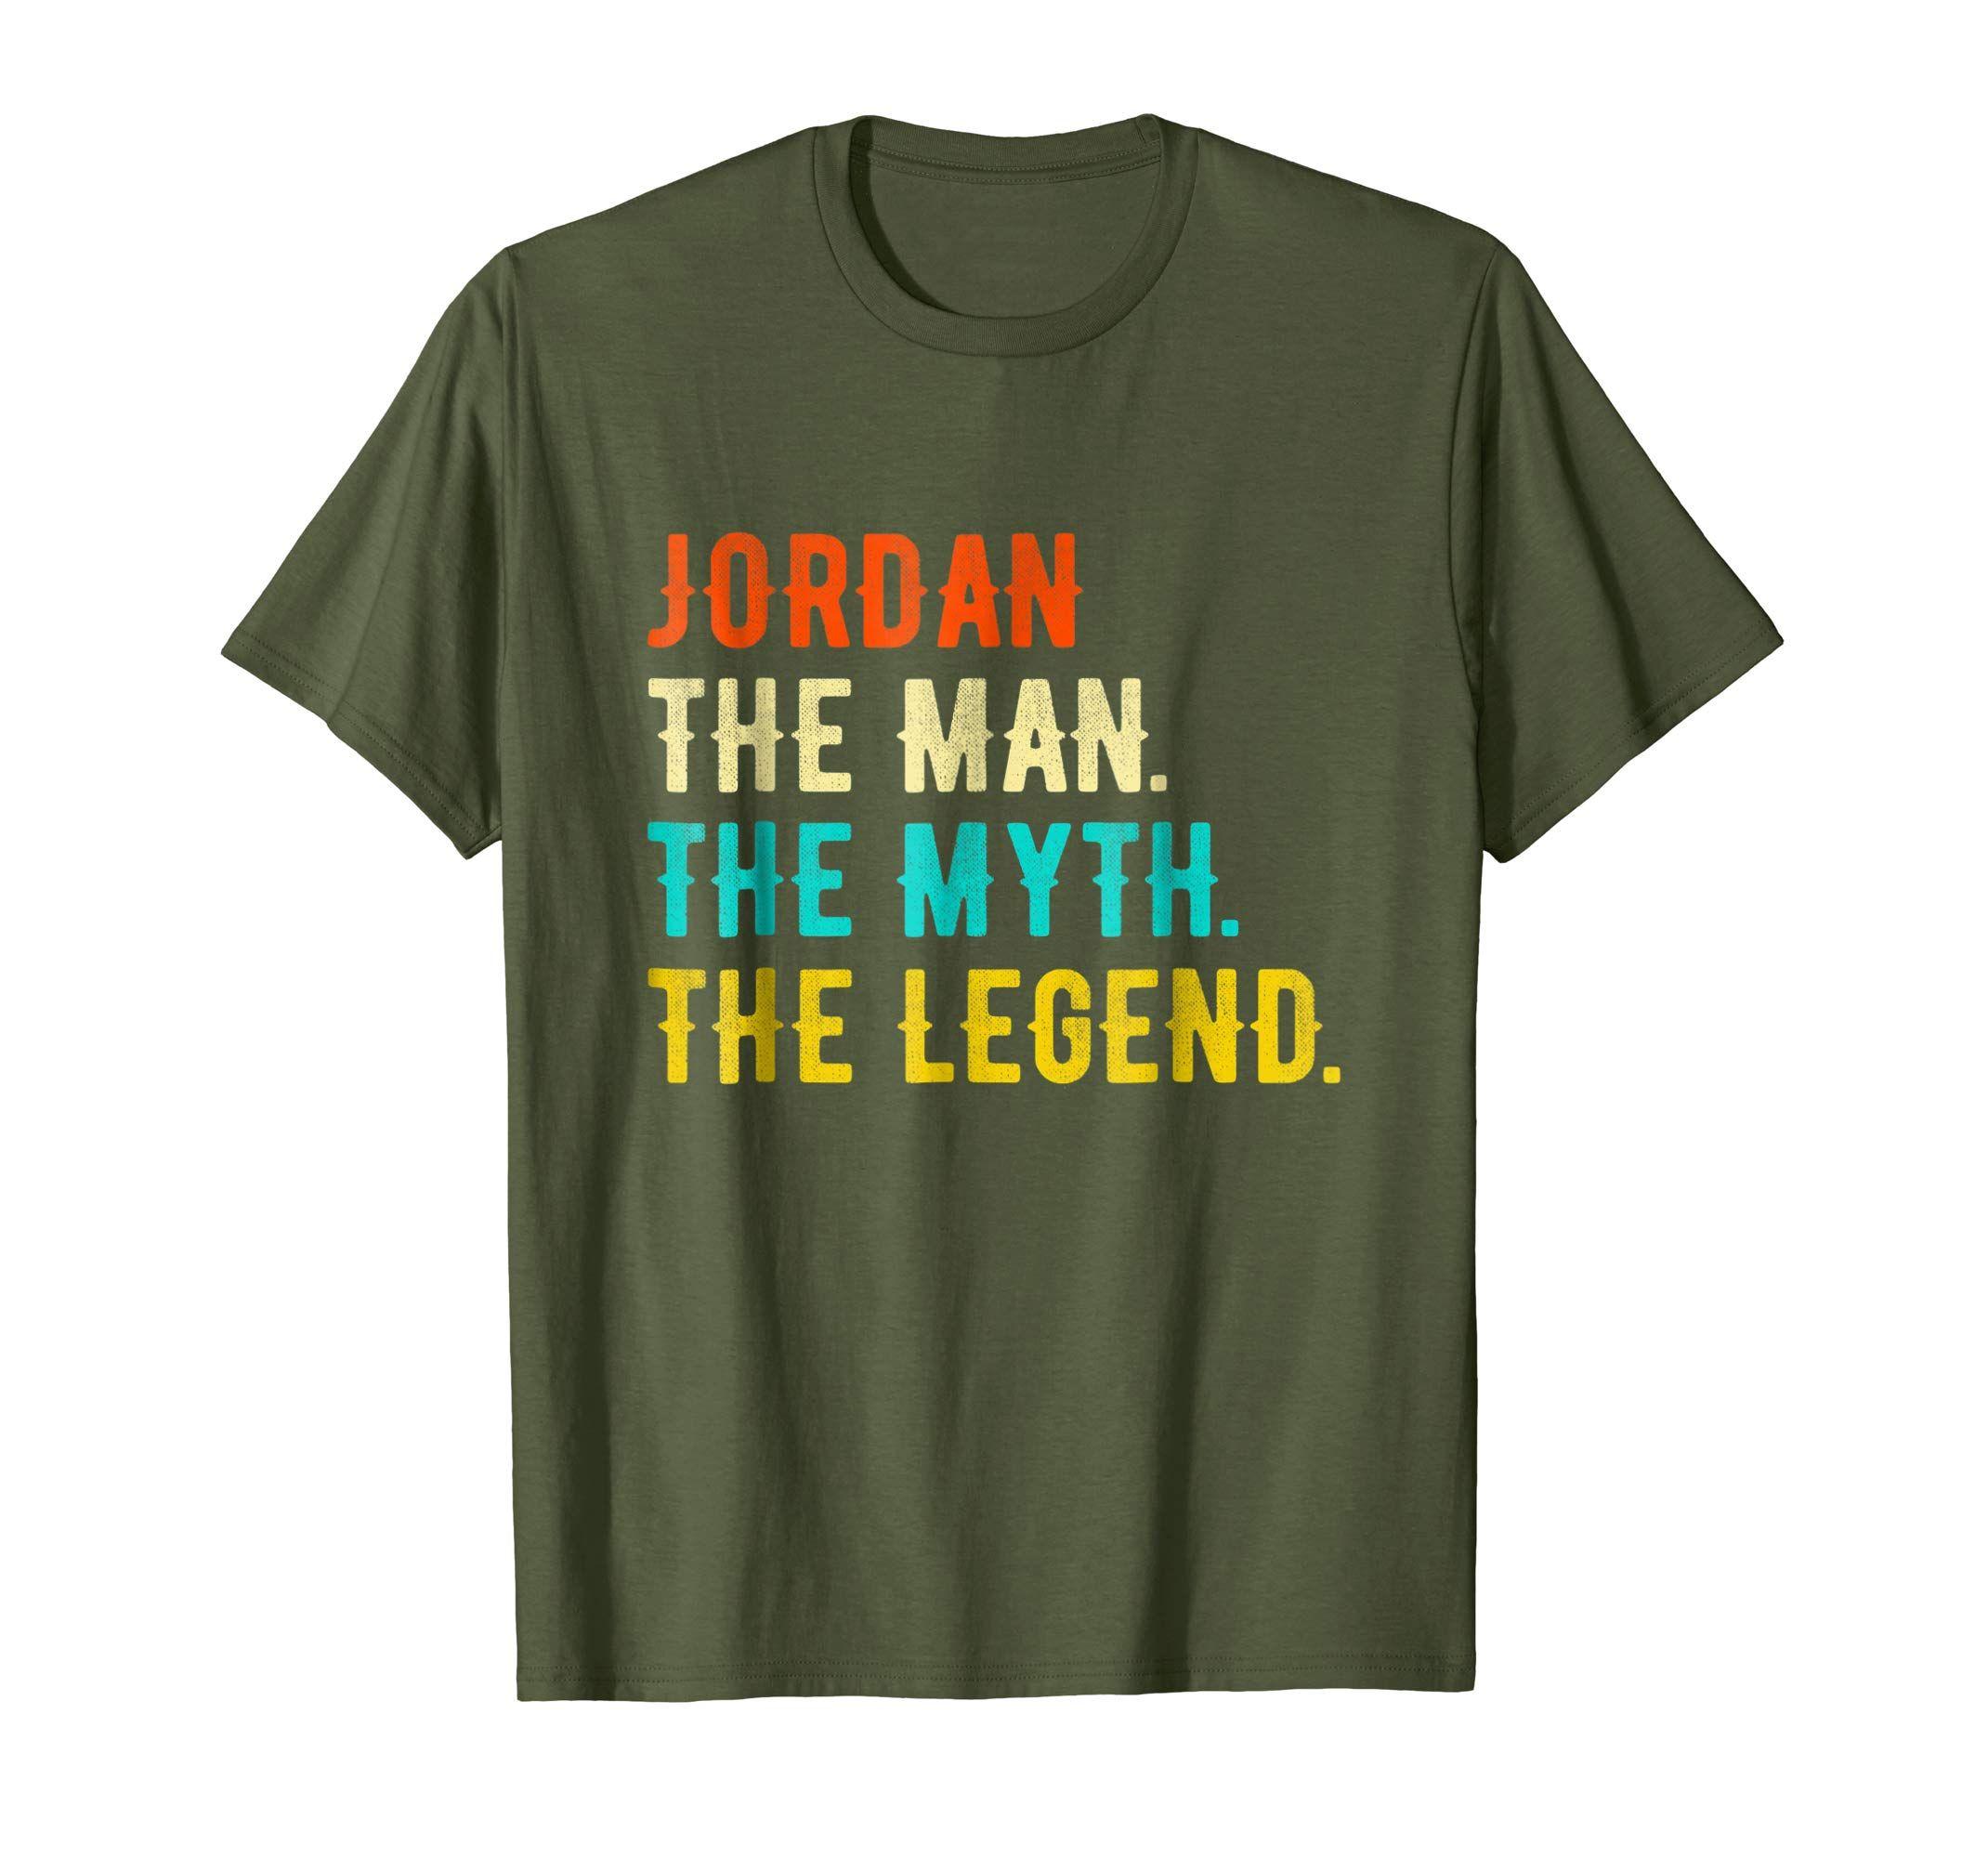 Jordan Legend Logo - Amazon.com: JORDAN The Man The Myth The Legend T-Shirt Vintage Tee ...